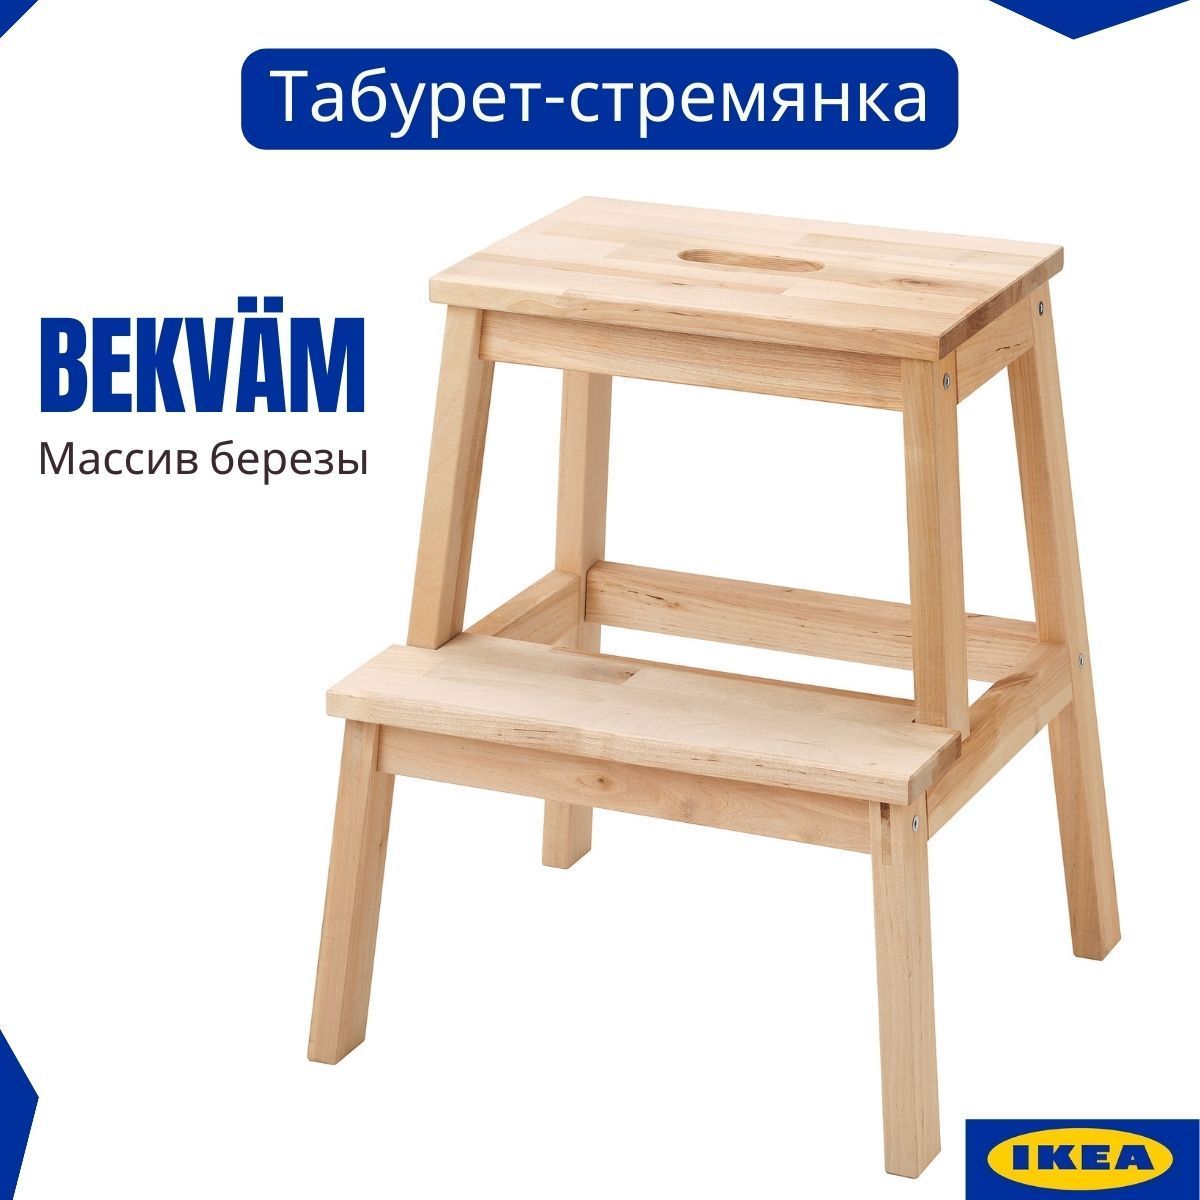 IKEA 90367551 БЕКВЭМ Табурет-лестница, береза, 50 см